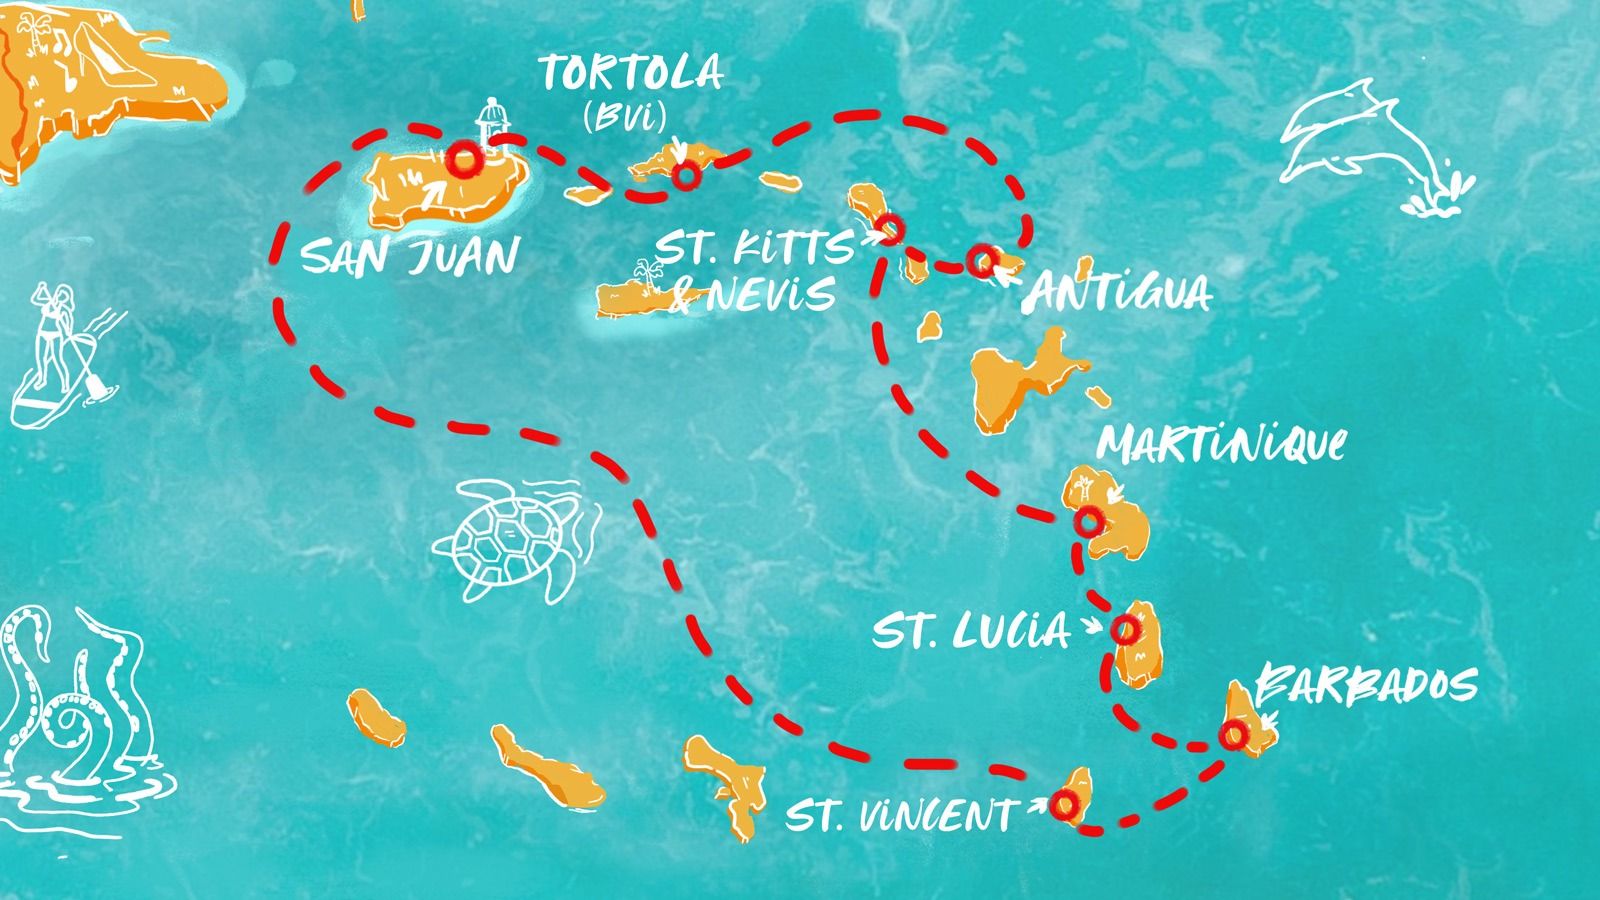 Puerto Rican Daze & Caribbean Nights Itinerary Map